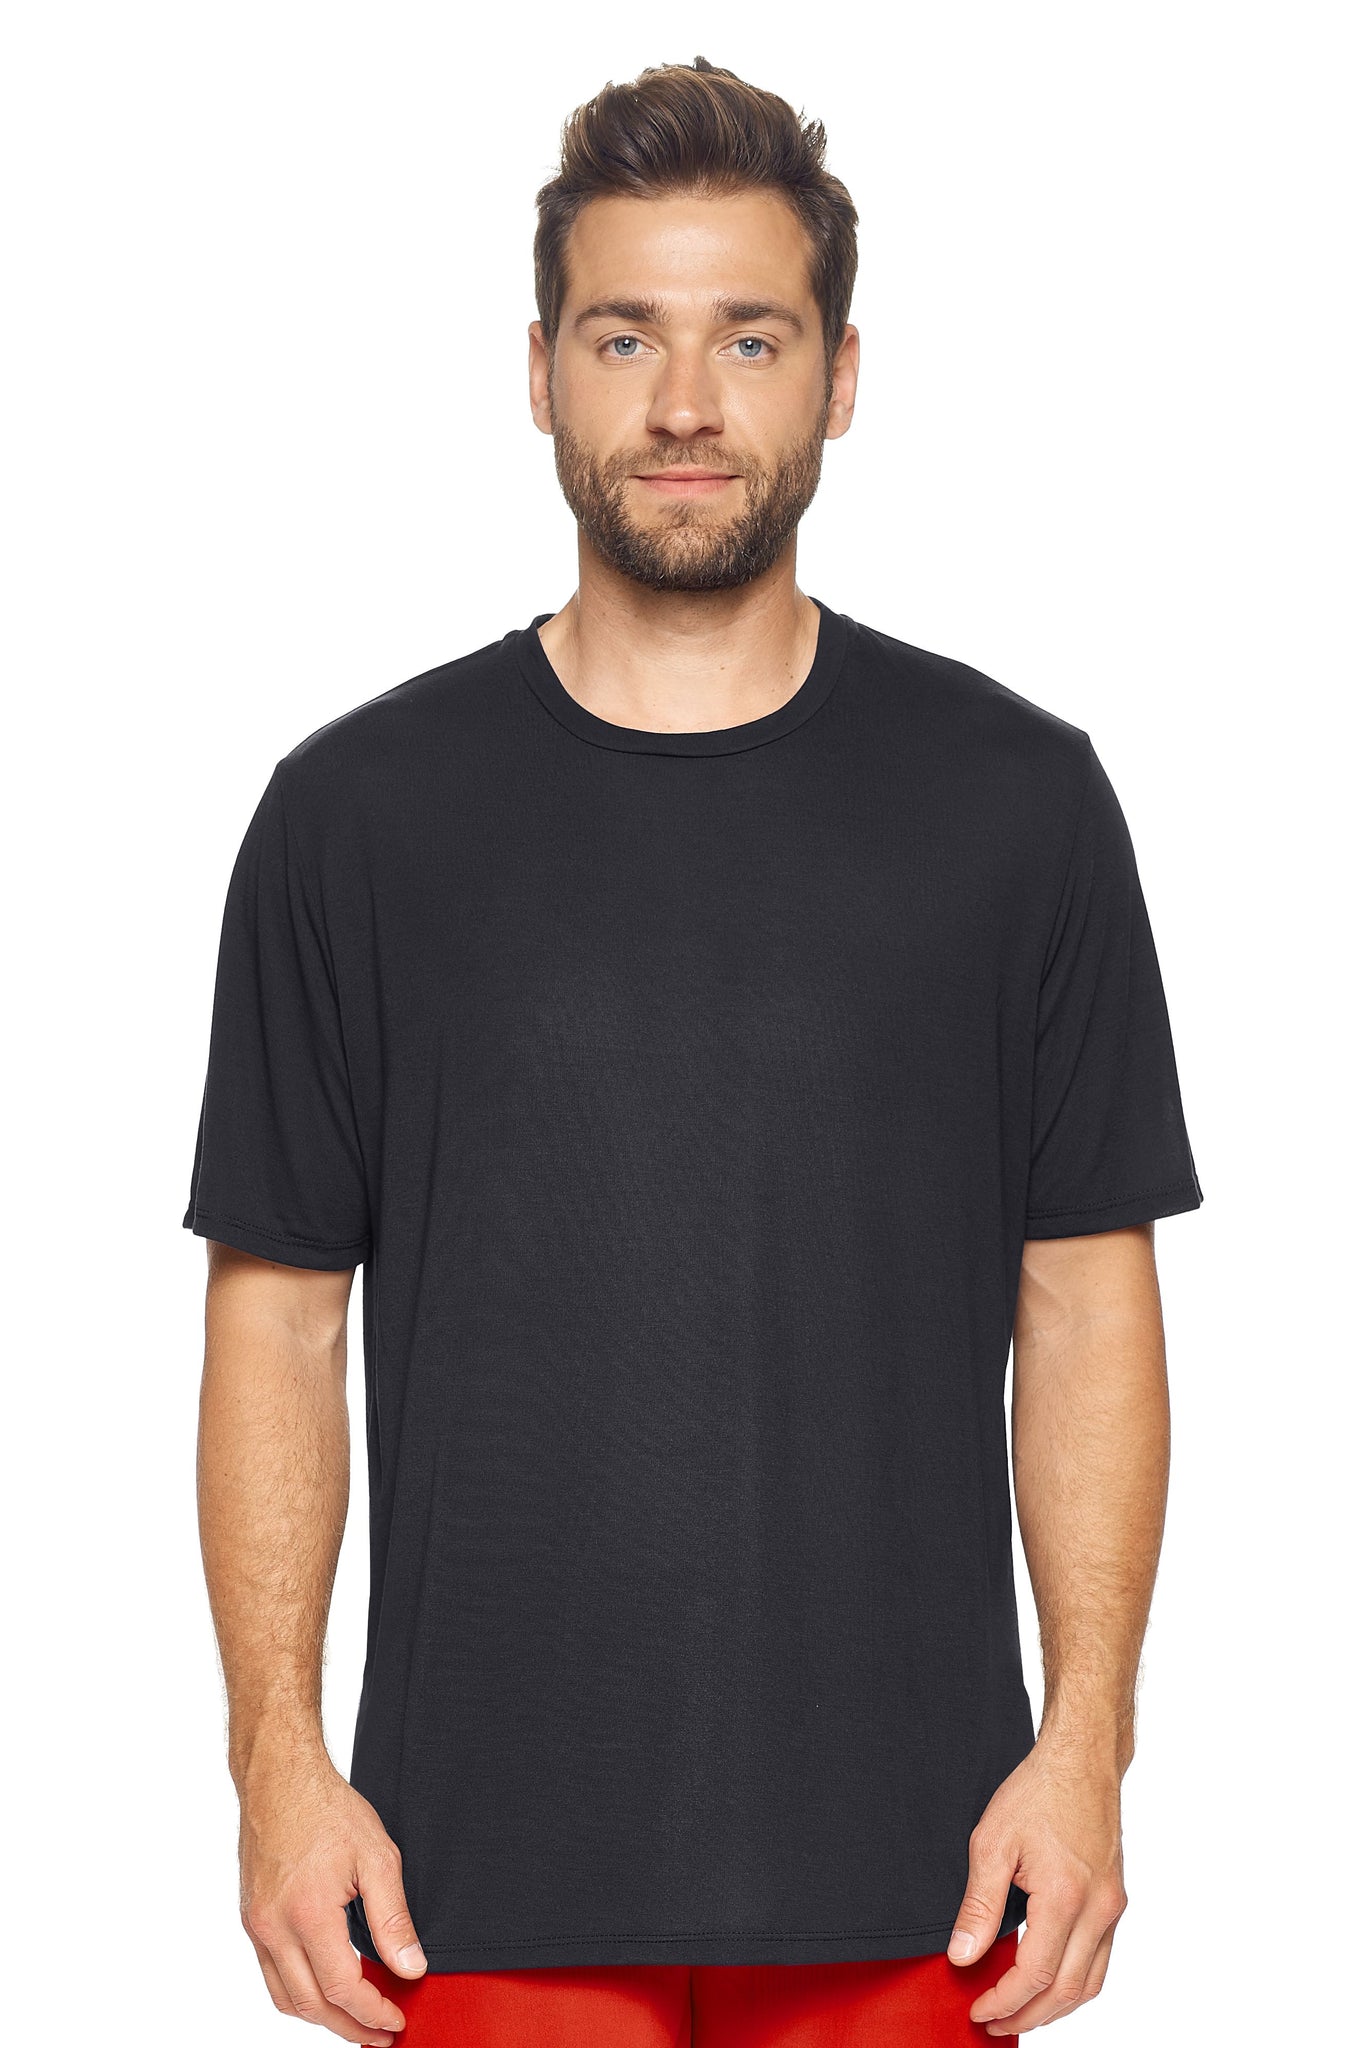 Expert Brand Wholesale Super Soft Eco-Friendly Performance Apparel Fashion Sportswear Men's Crewneck T-Shirt Made in USA black#black